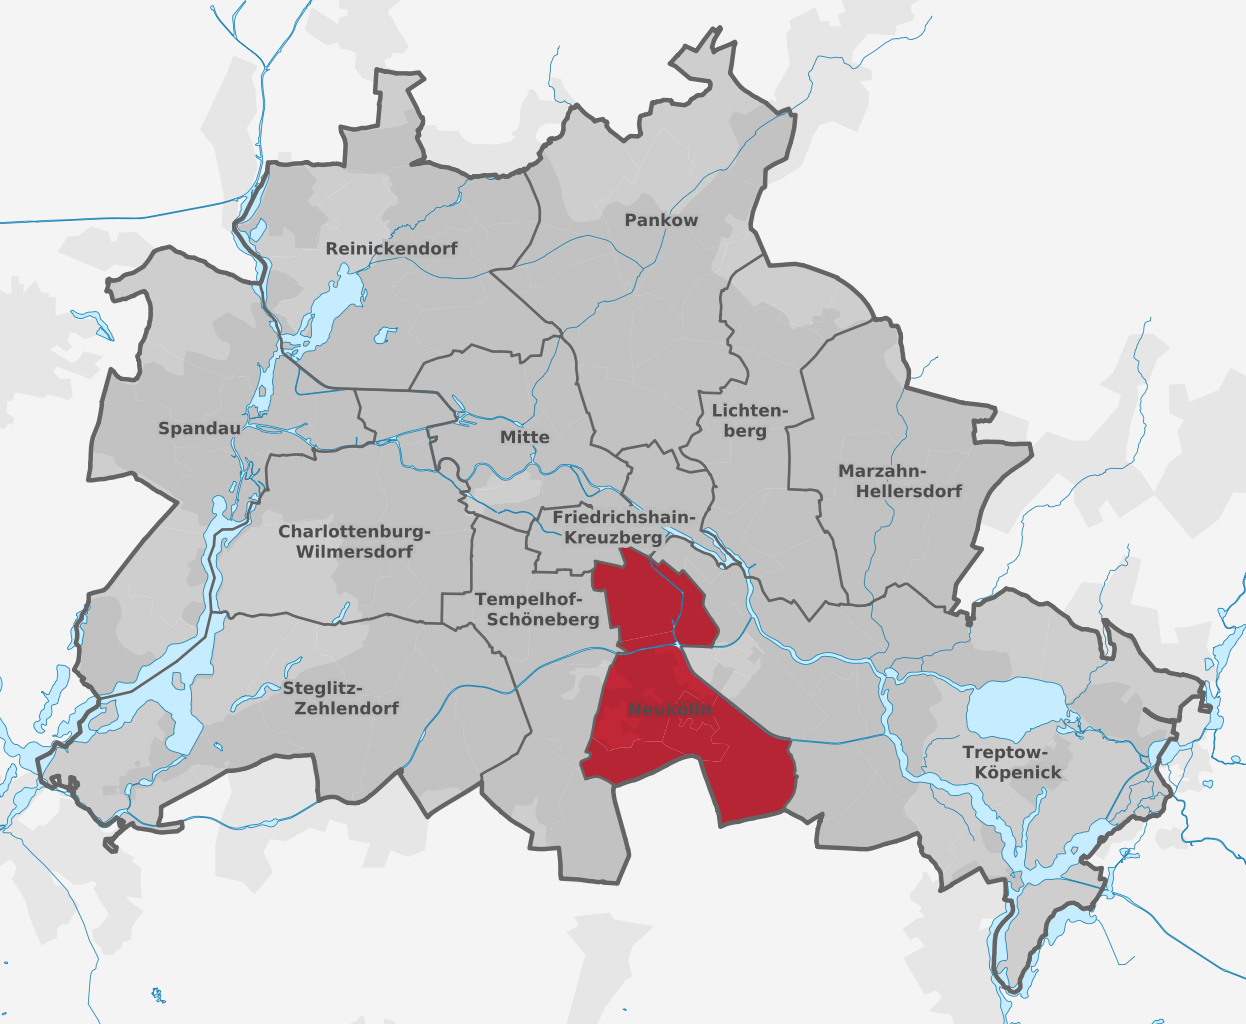 Bezirk Neukölln - Quelle: https://upload.wikimedia.org/wikipedia/commons/thumb/6/62/Berlin_Bezirk_Neukölln_%28labeled%29.svg/1246px-Berlin_Bezirk_Neukölln_%28labeled%29.svg.png